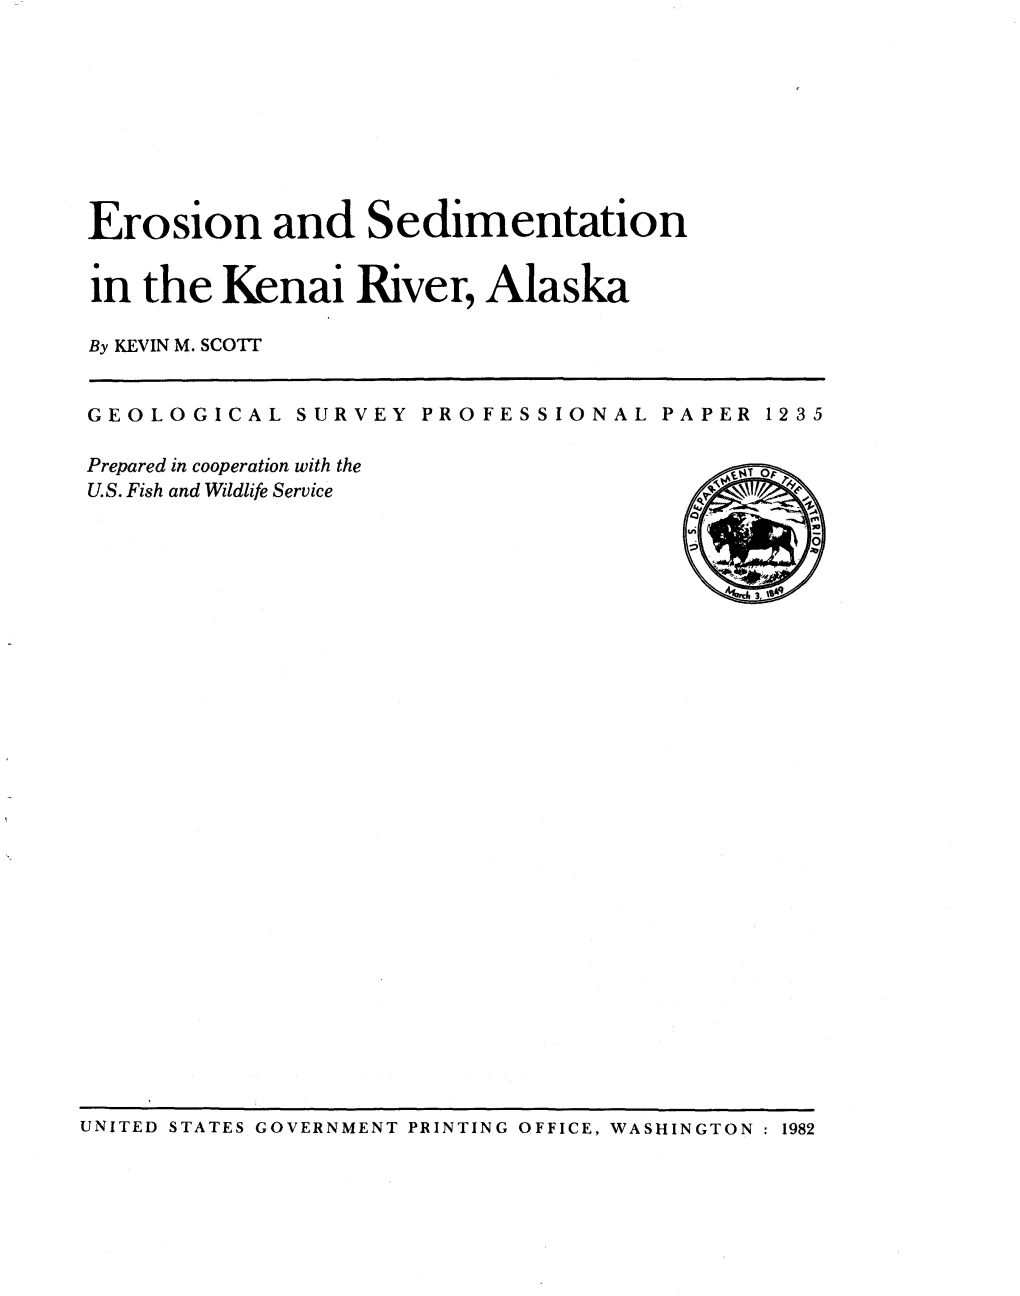 Erosion and Sedimentation in the Kenai Fiver, Alaska